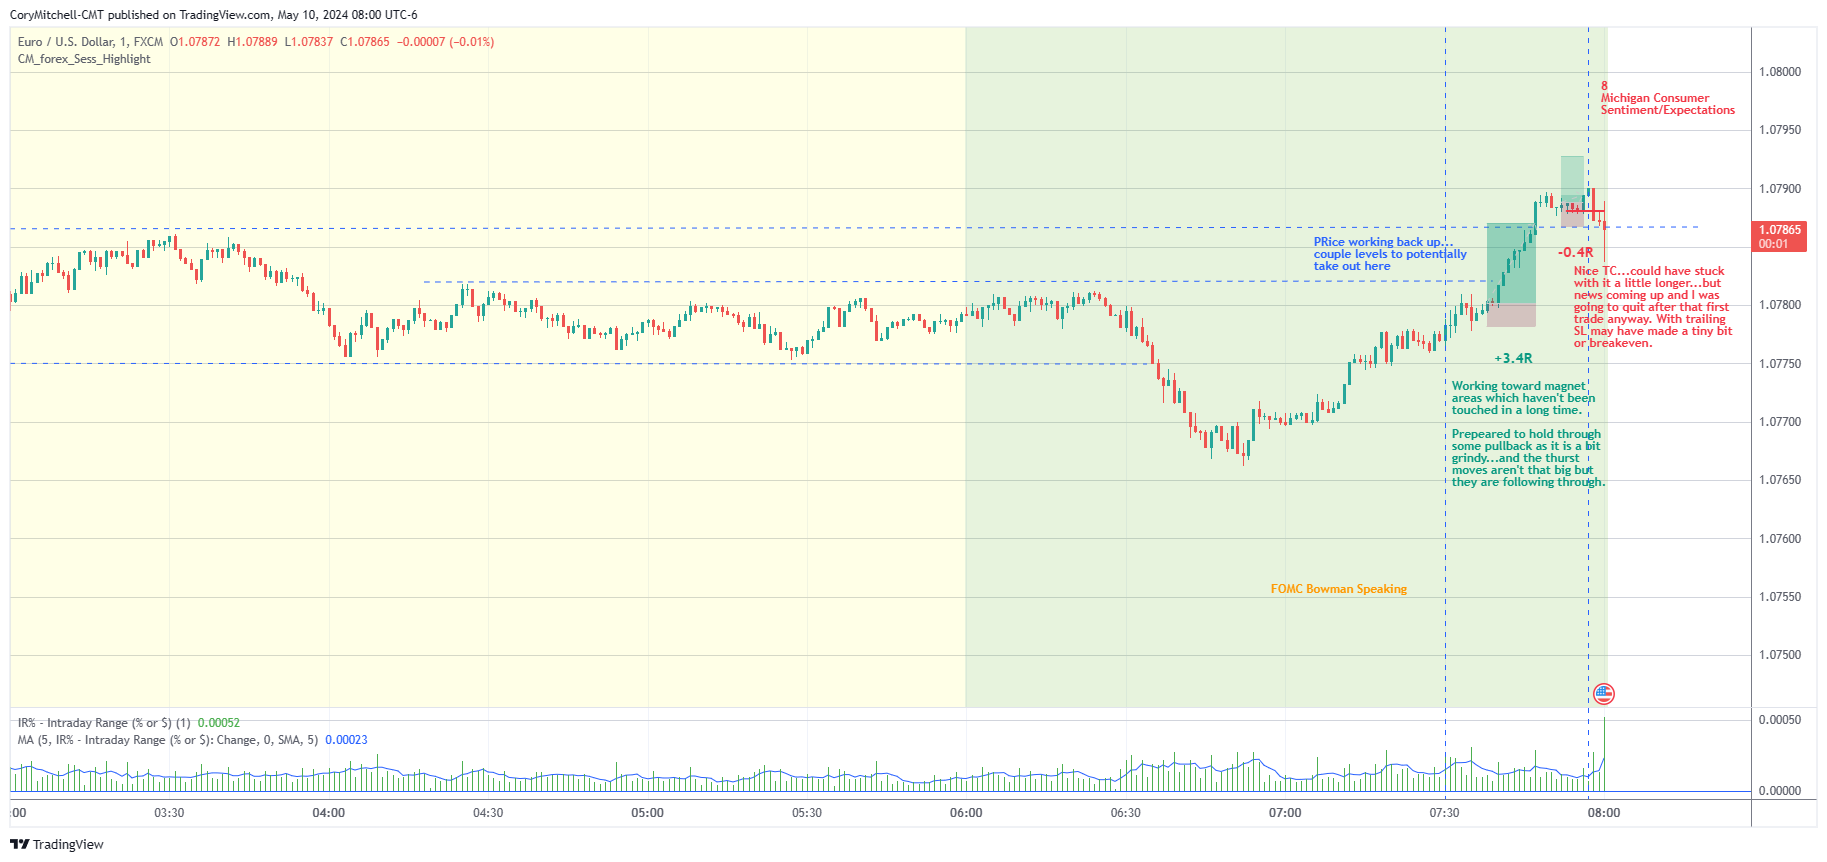 EURUSD 1 minute chart day trading examples May 10 2024